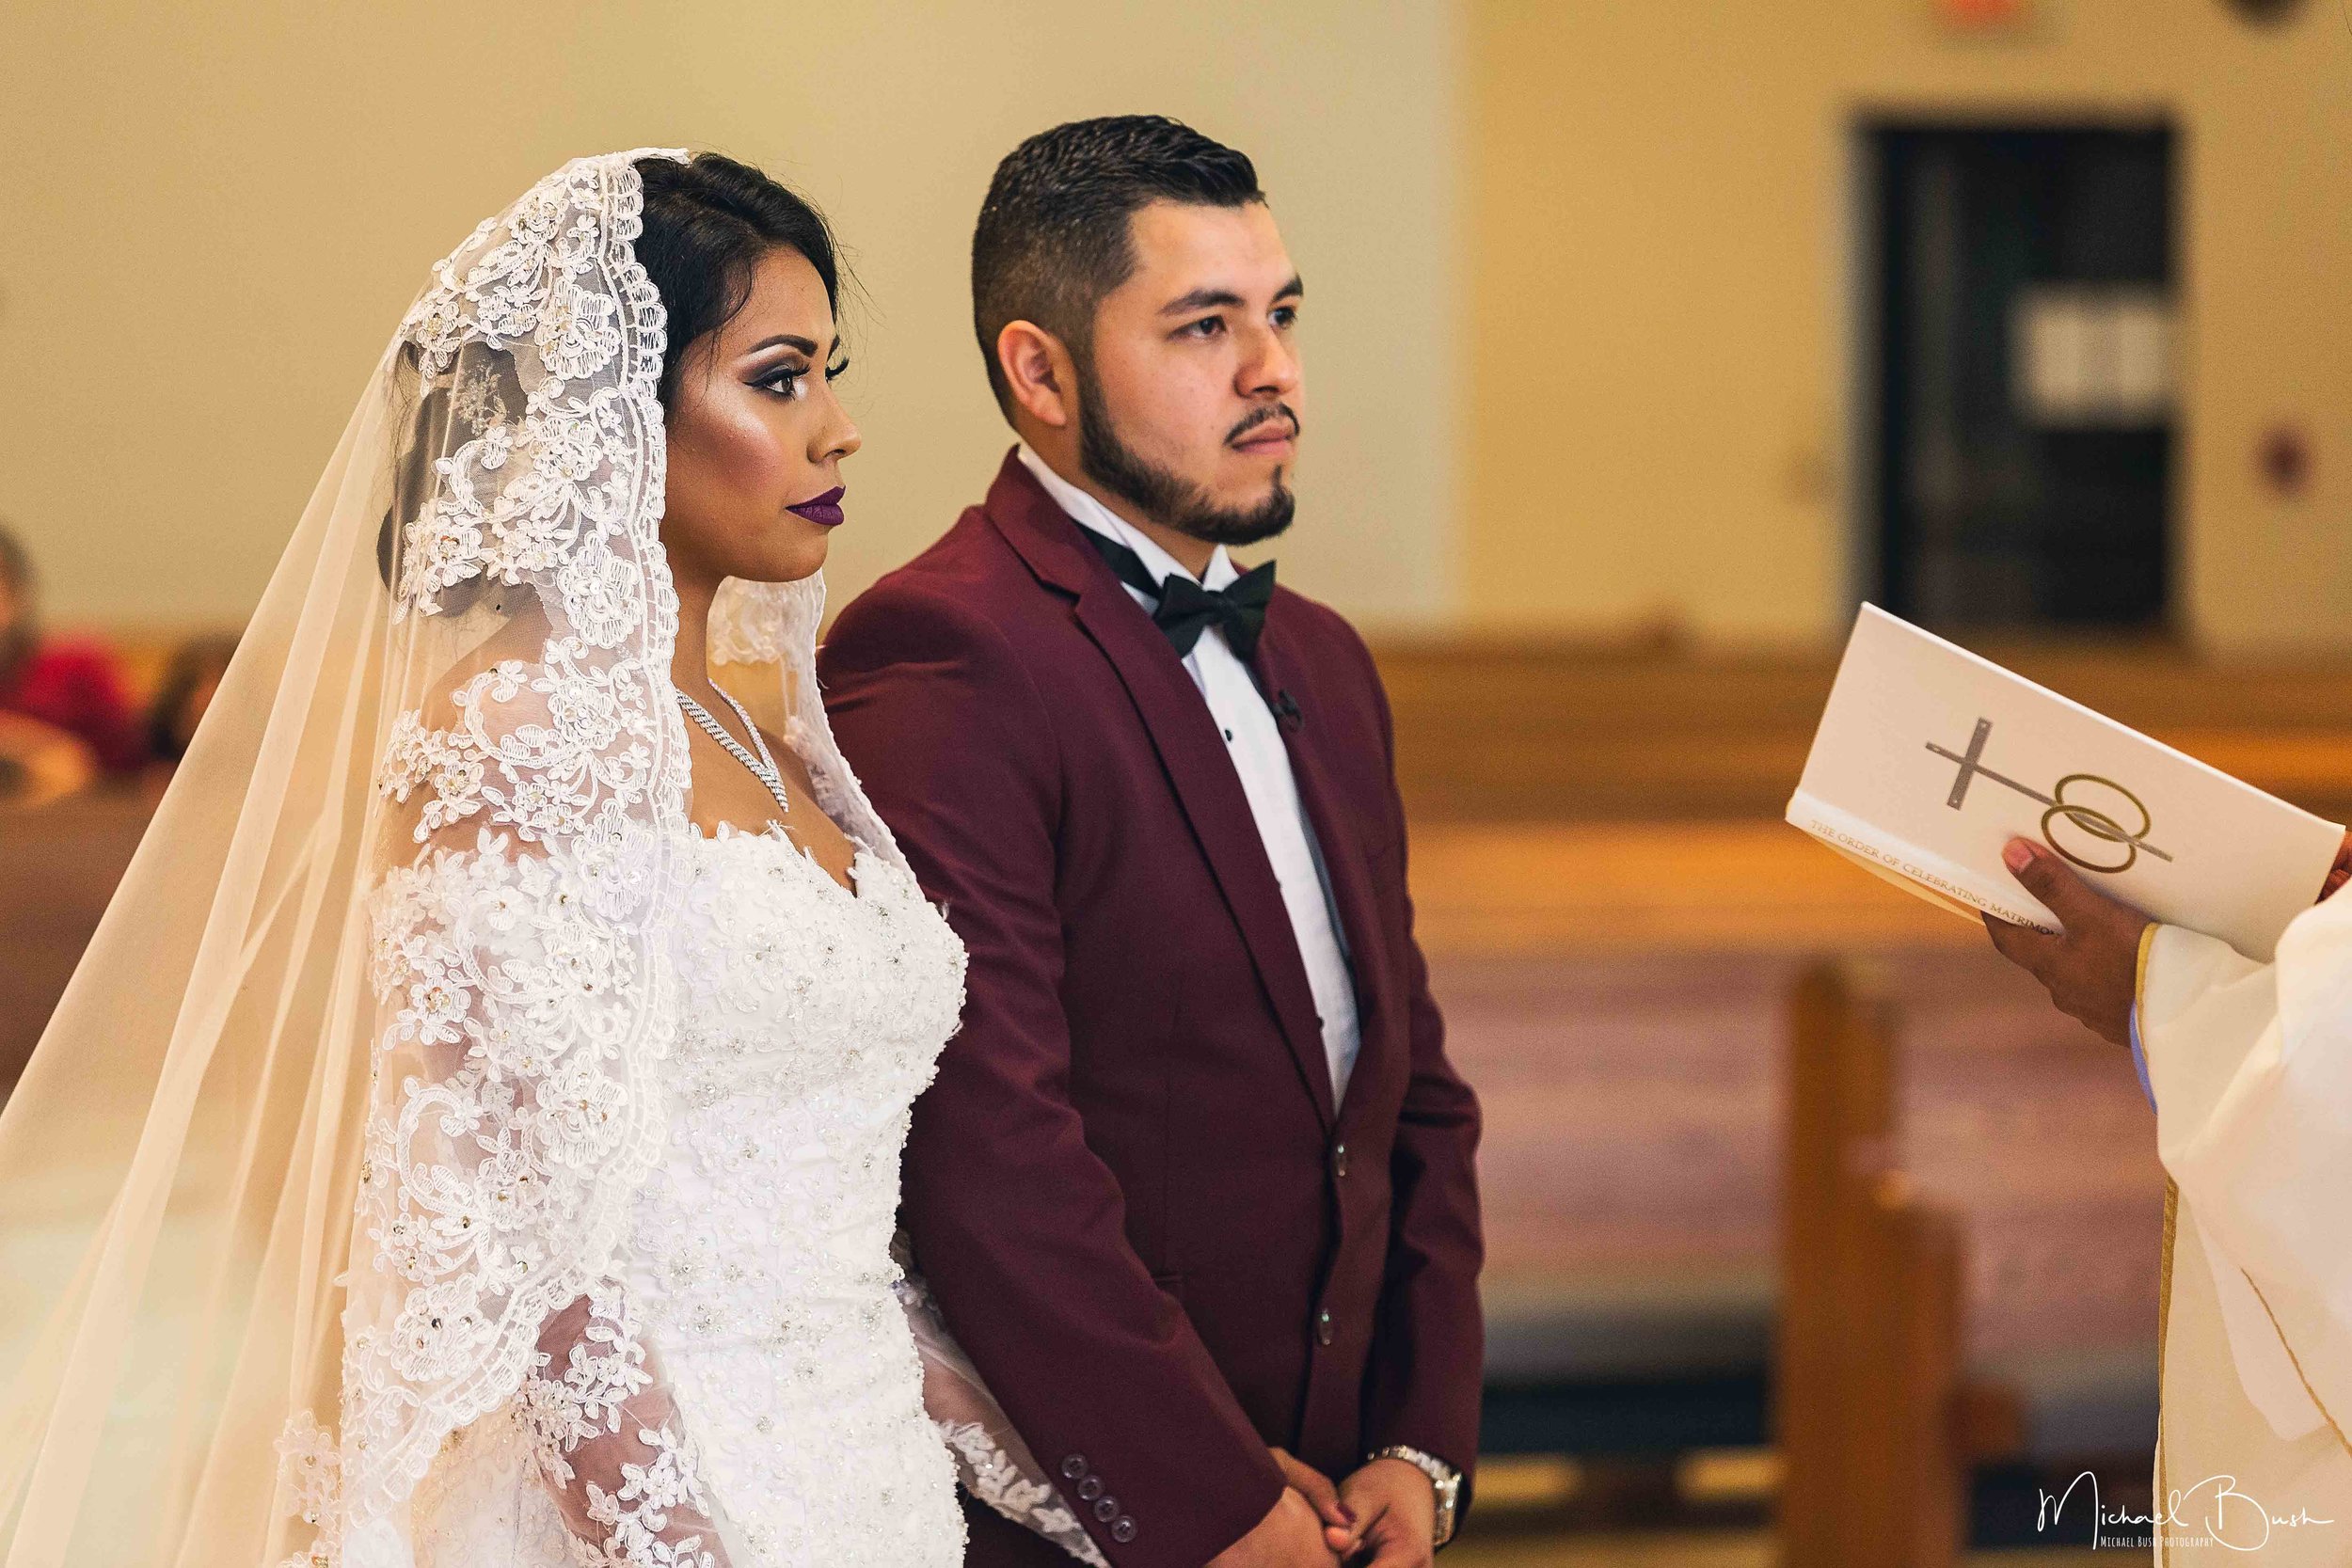 Wedding-Details-Bride-Fort Worth-colors-Ceremony-weddingceremony-brides-groom-ido-church-guadalupe.jpg